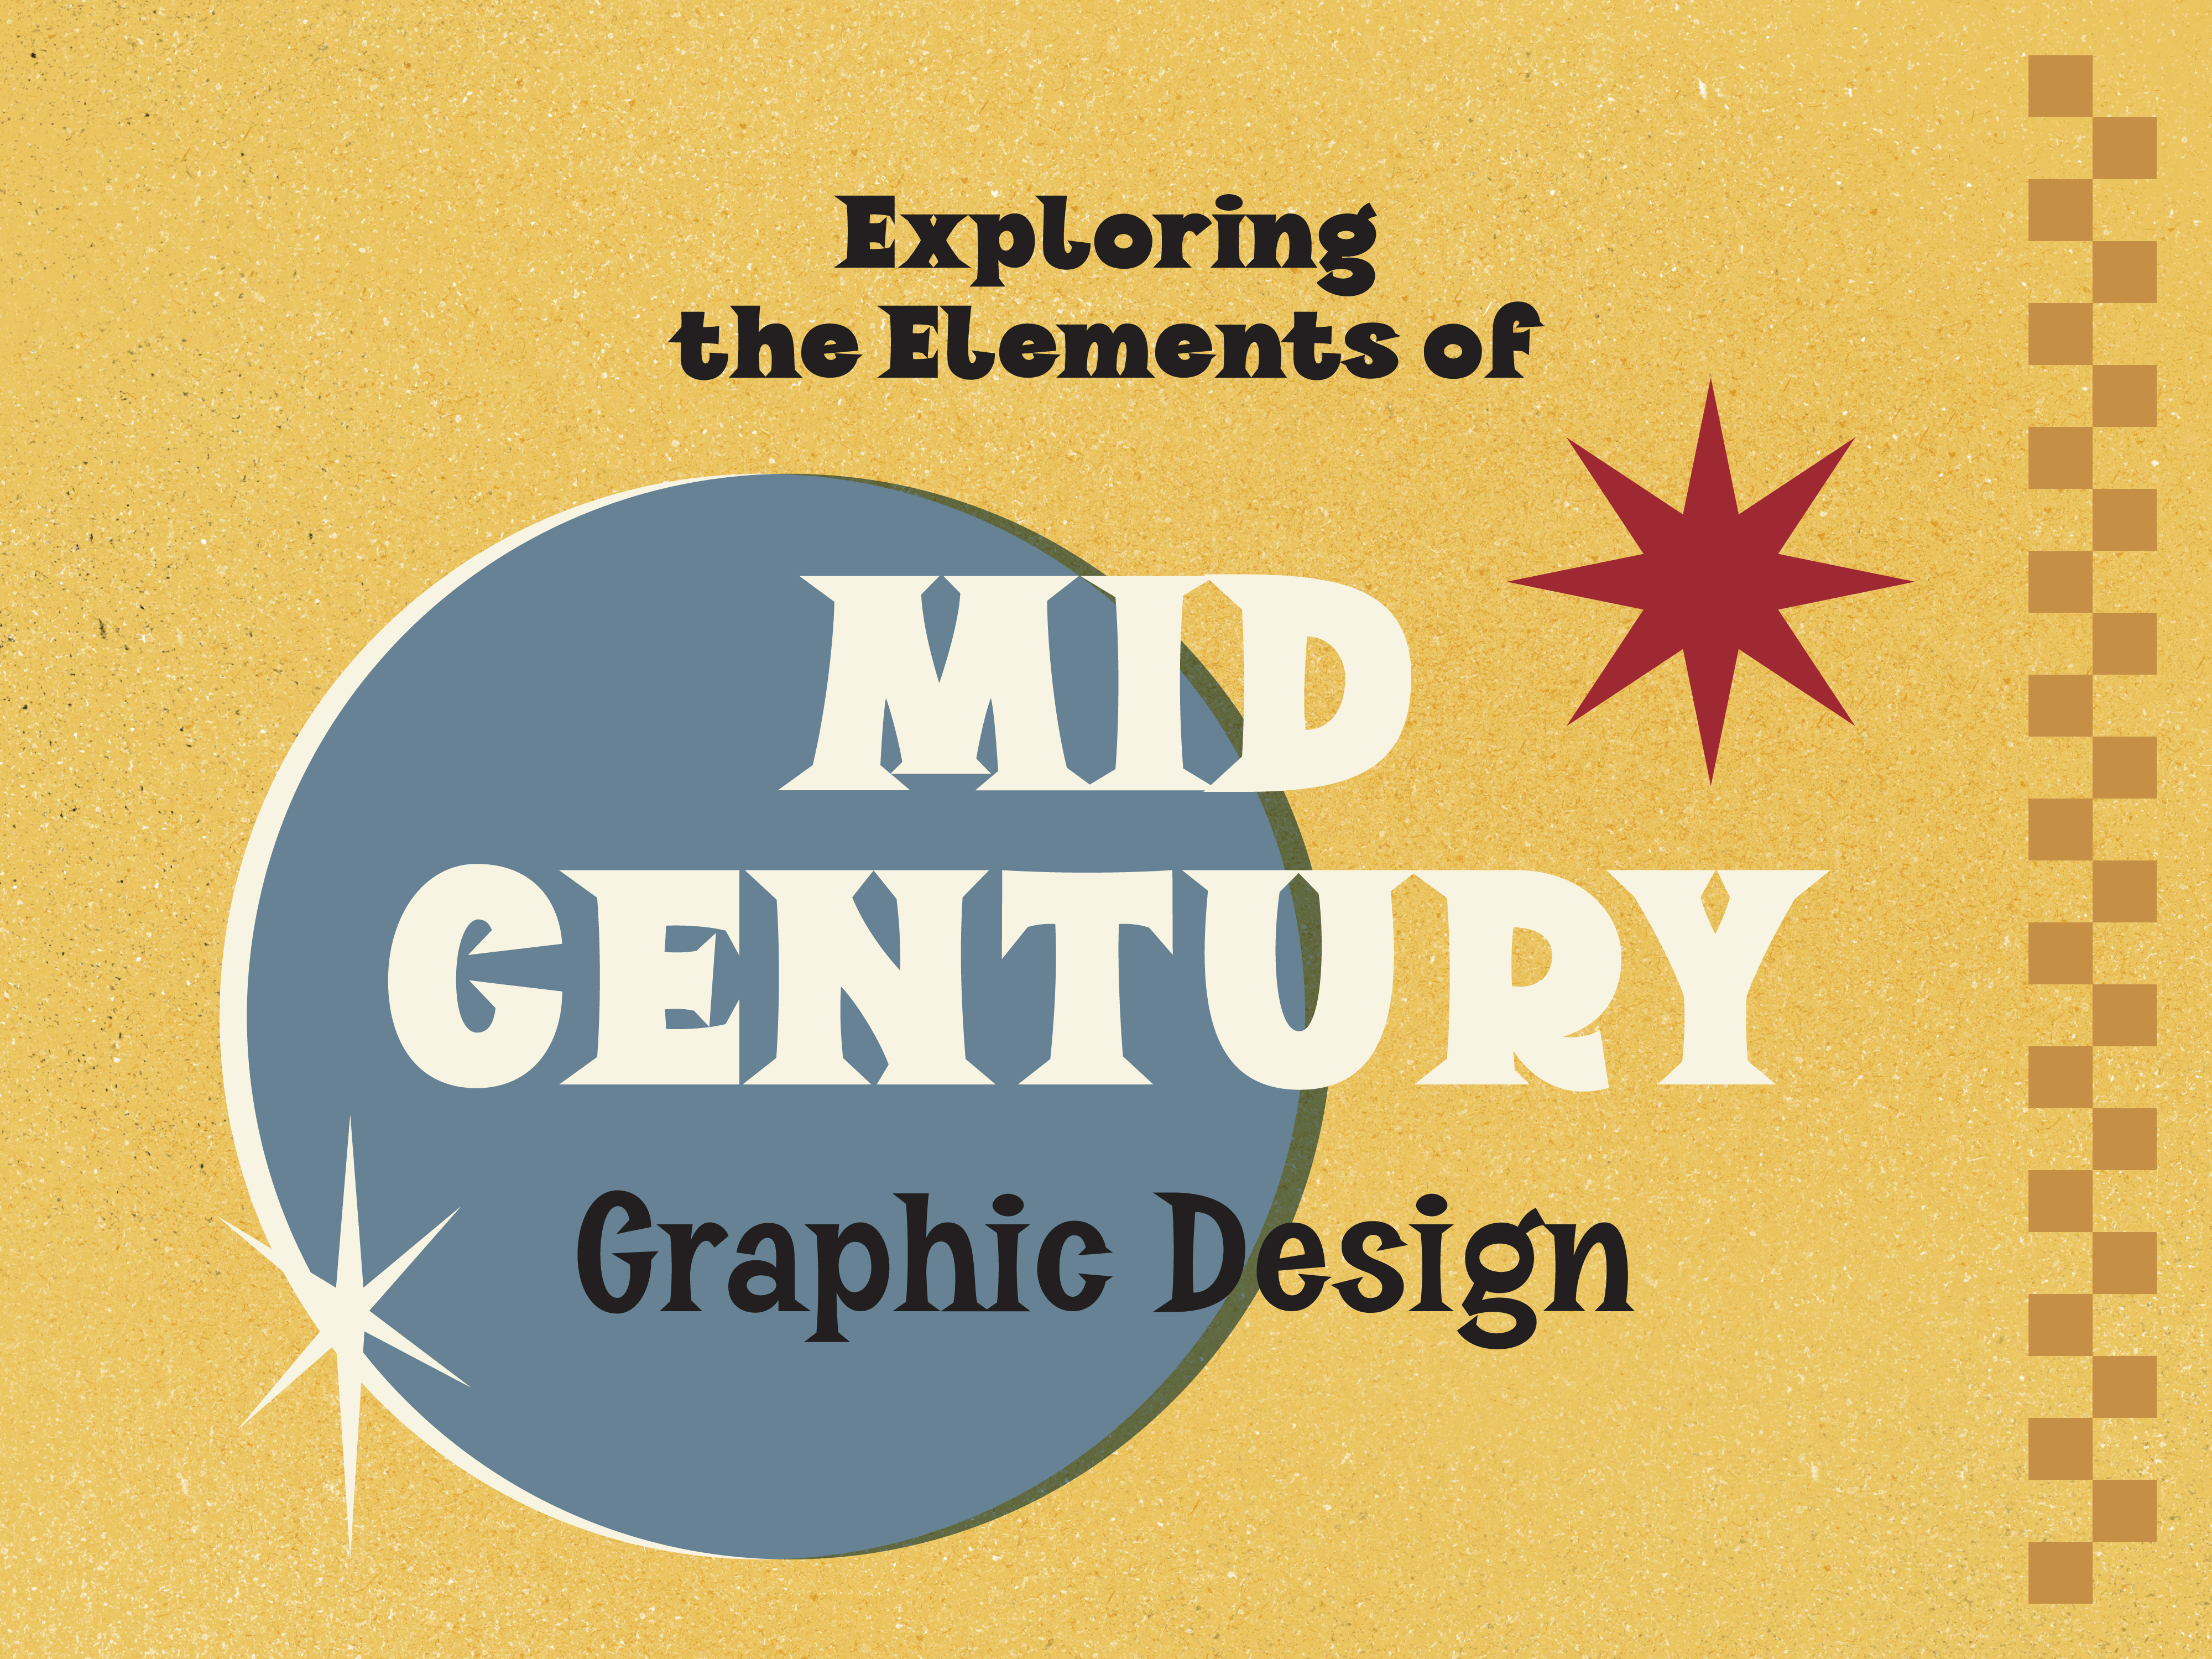 Exploring the Elements of Midcentury Graphic Design